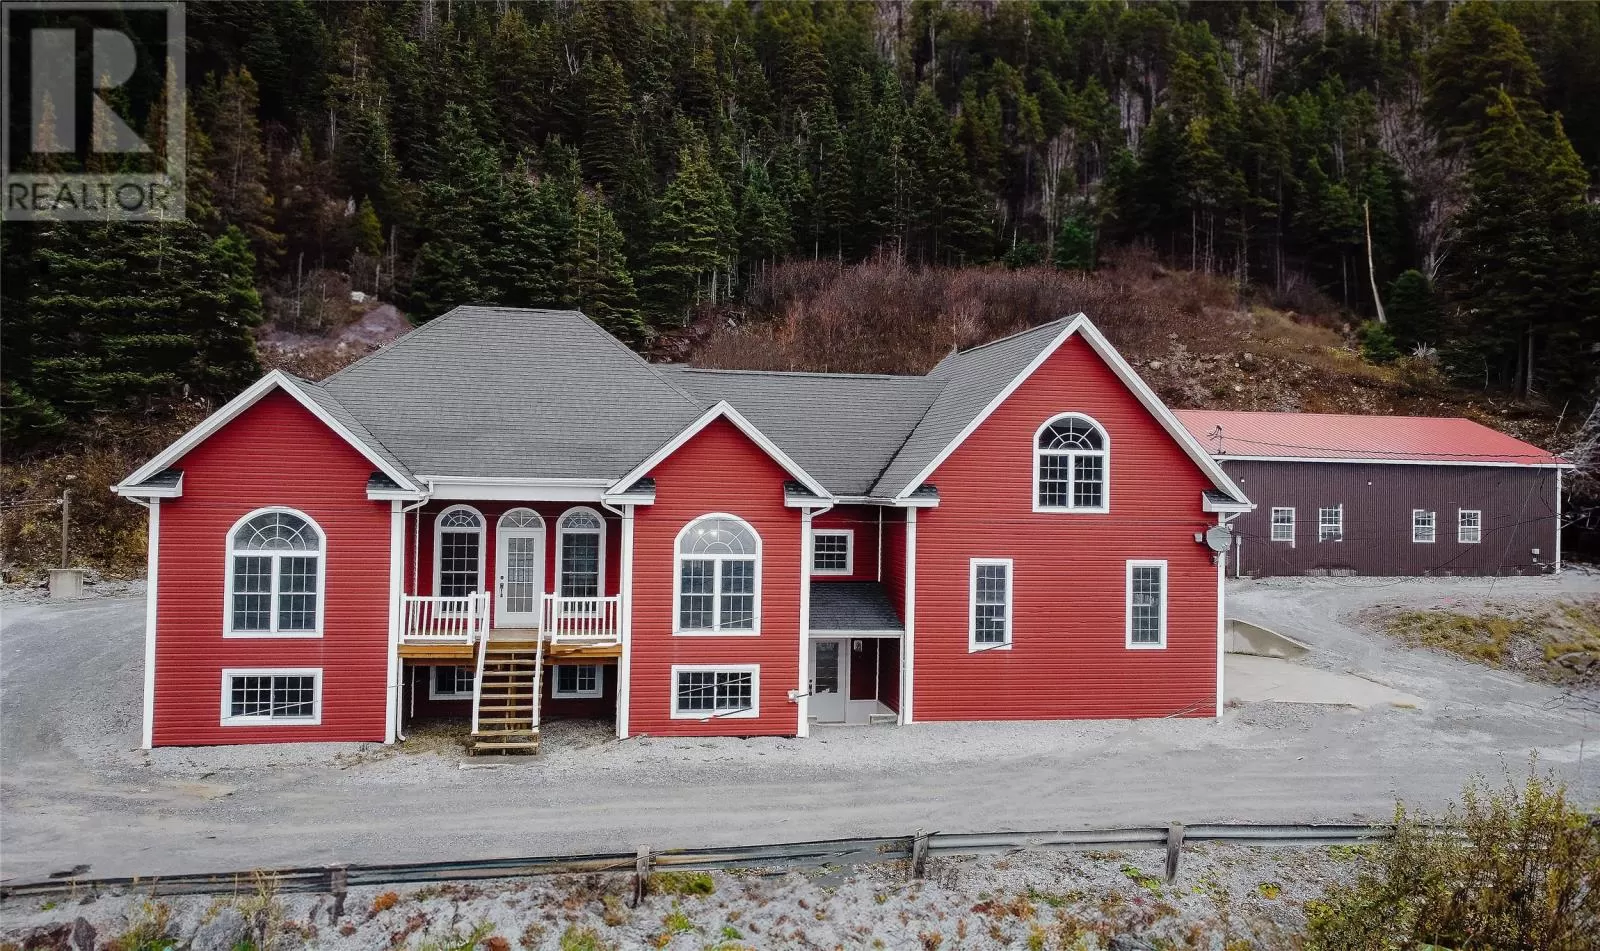 House for rent: 464 Main Street, Summerside, Newfoundland & Labrador A2H 4A1